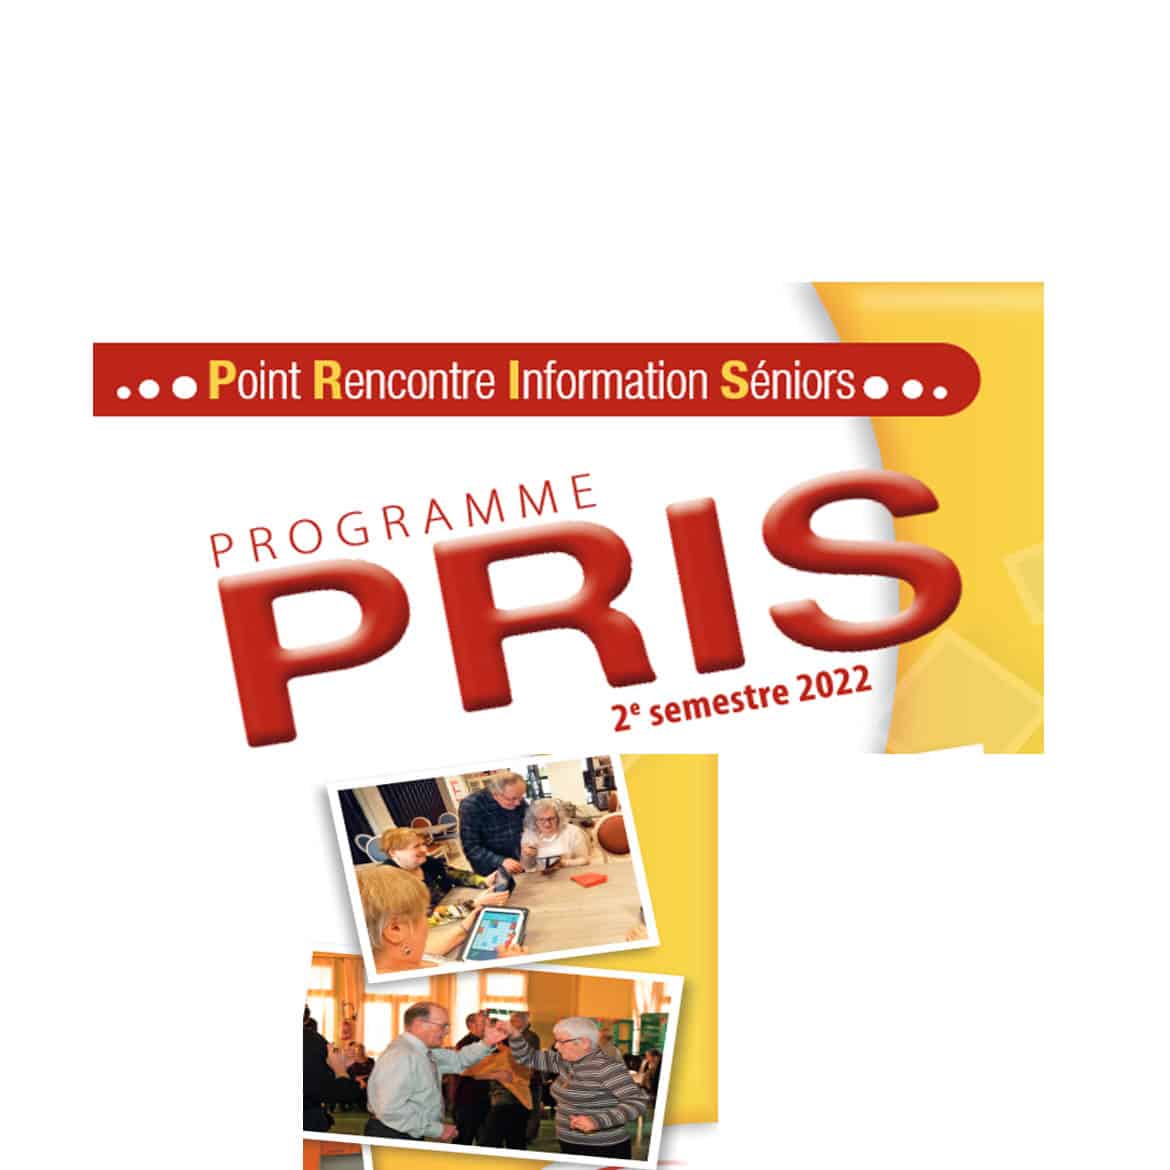 Point Rencontre Information Sénior (PRIS)